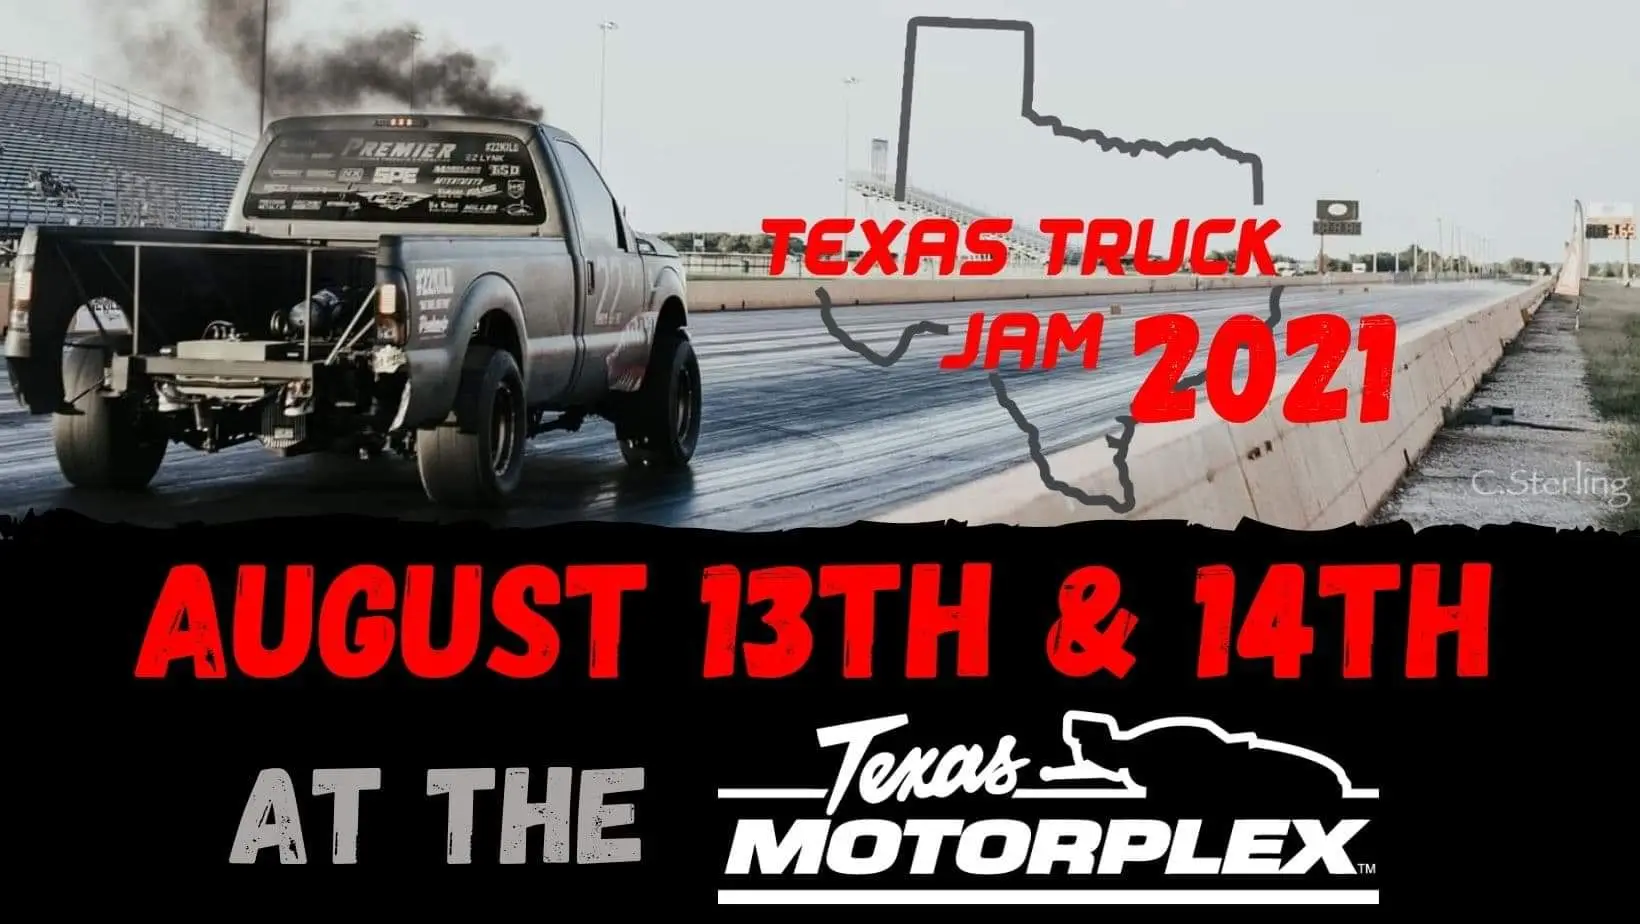 Texas Truck Jam lead wDates